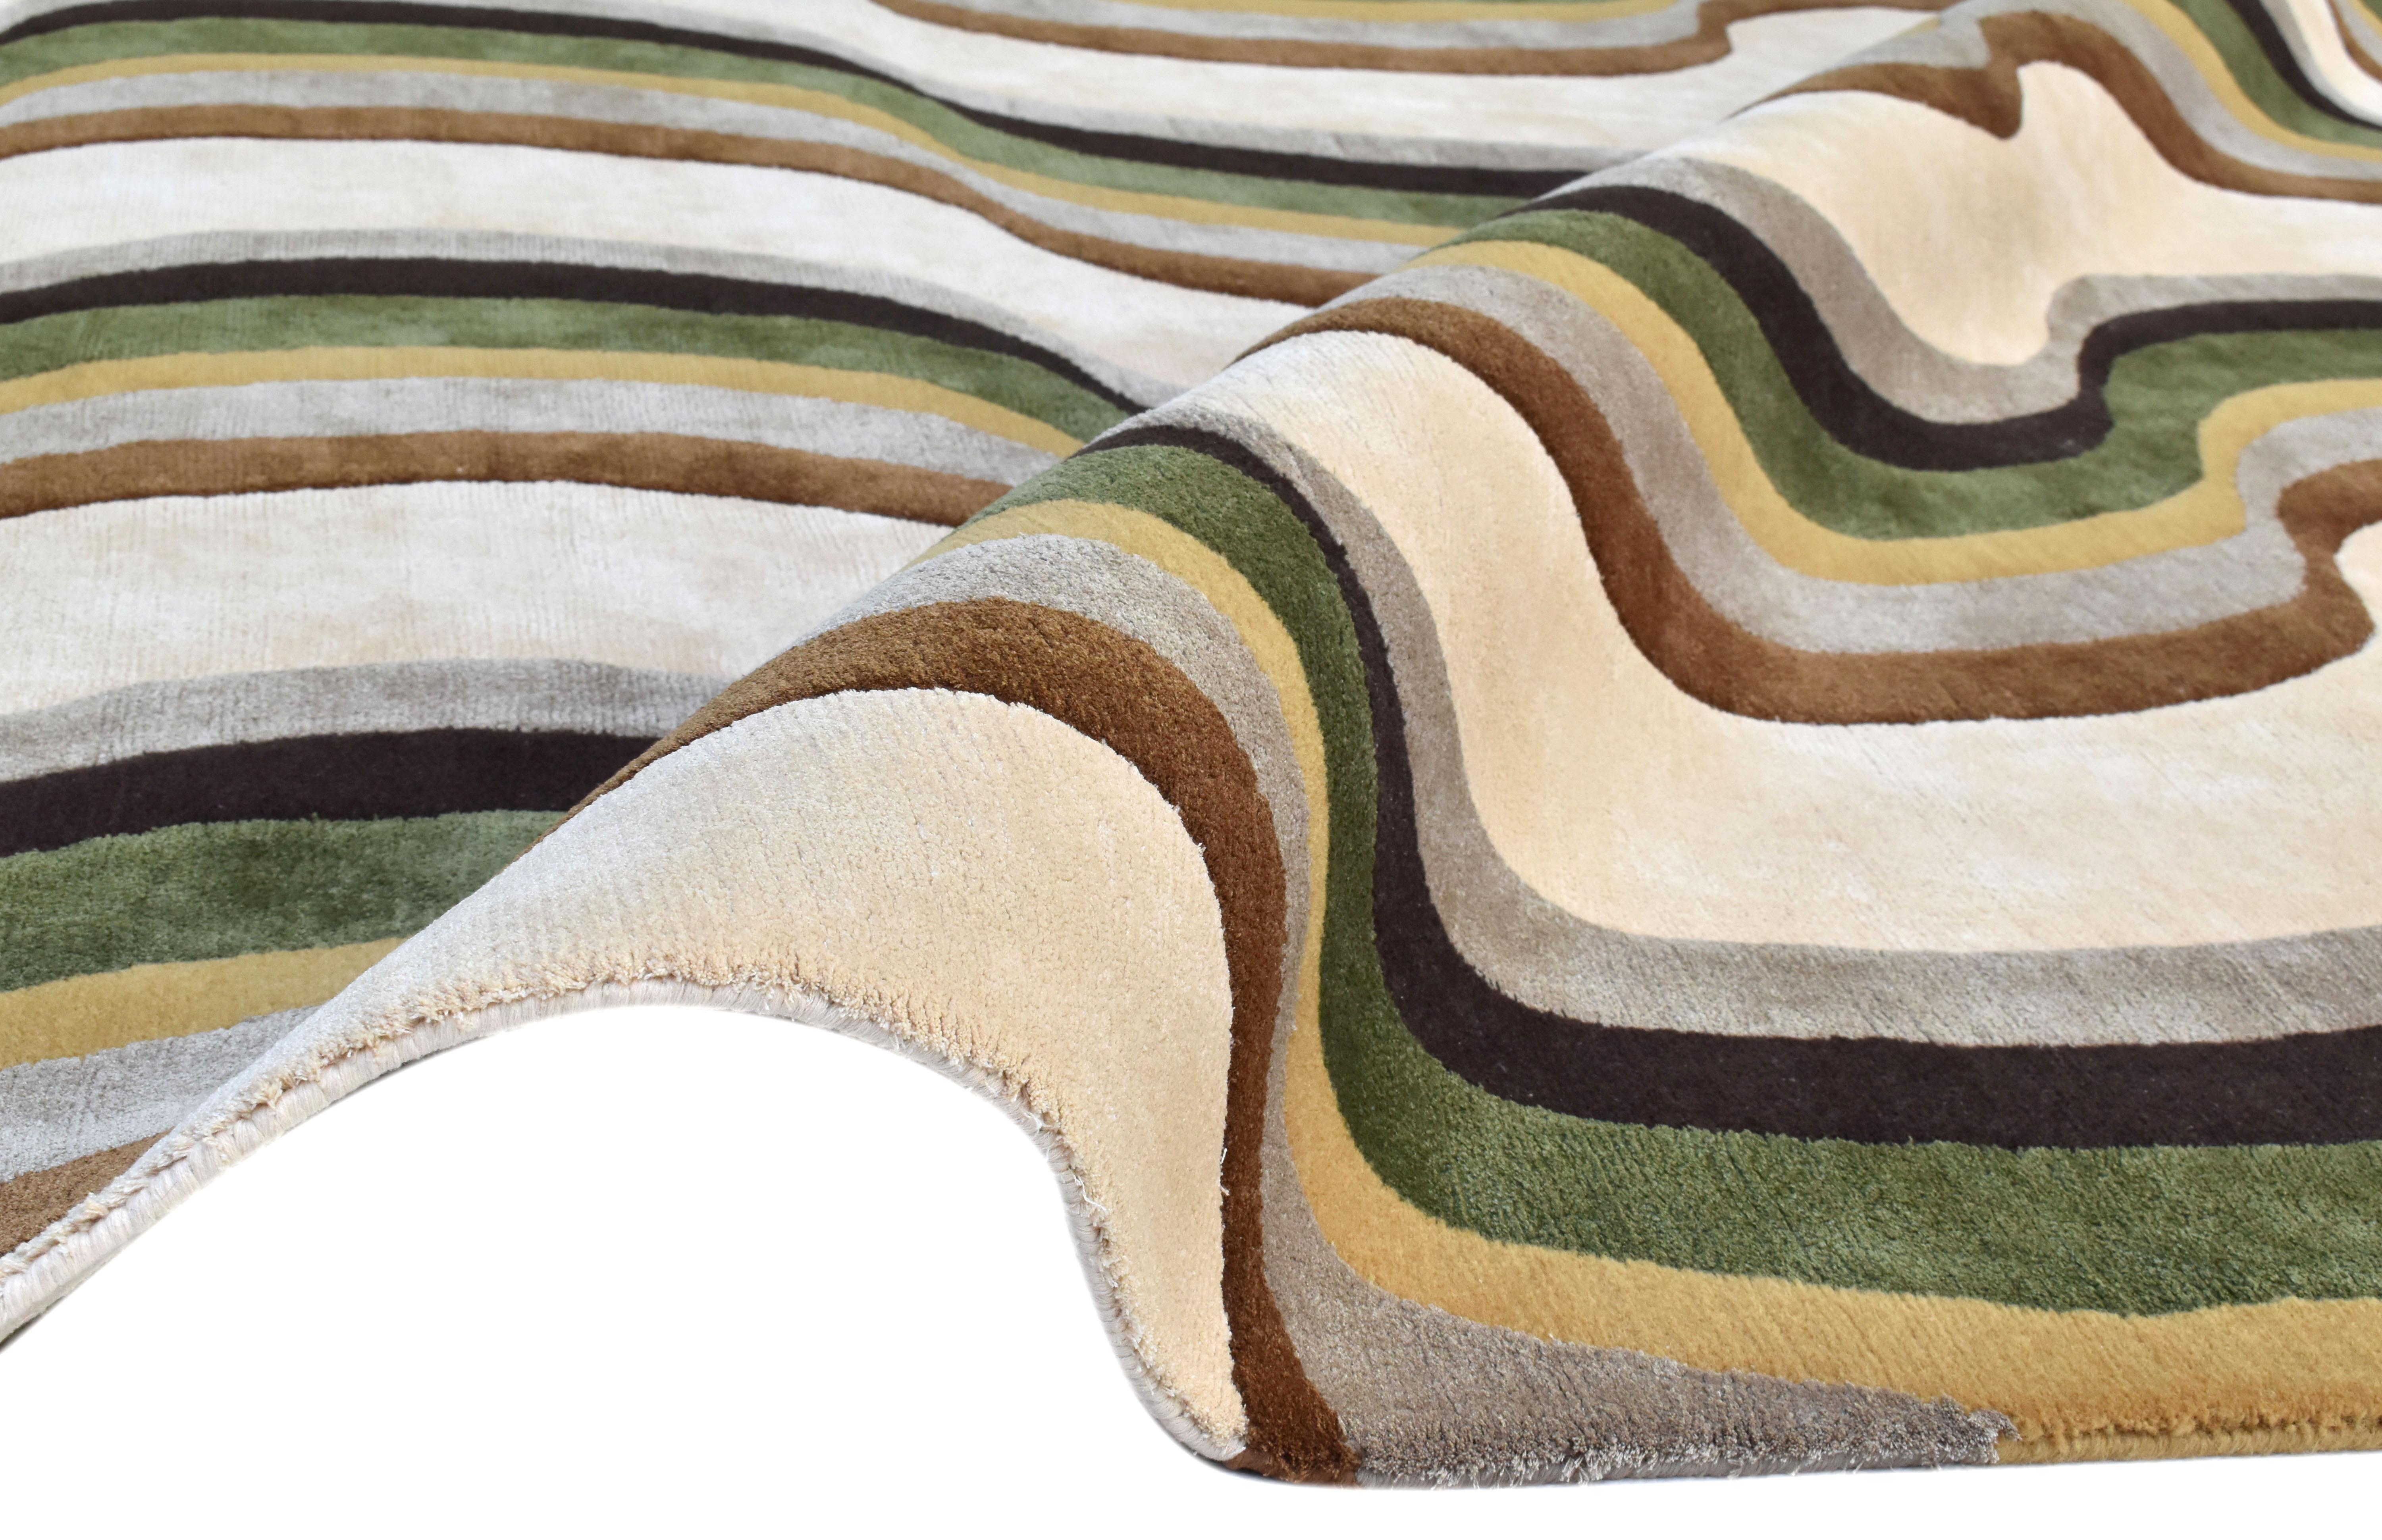 Wool Sasha Bikoff Collection, Modern Area Rug Green Brown 